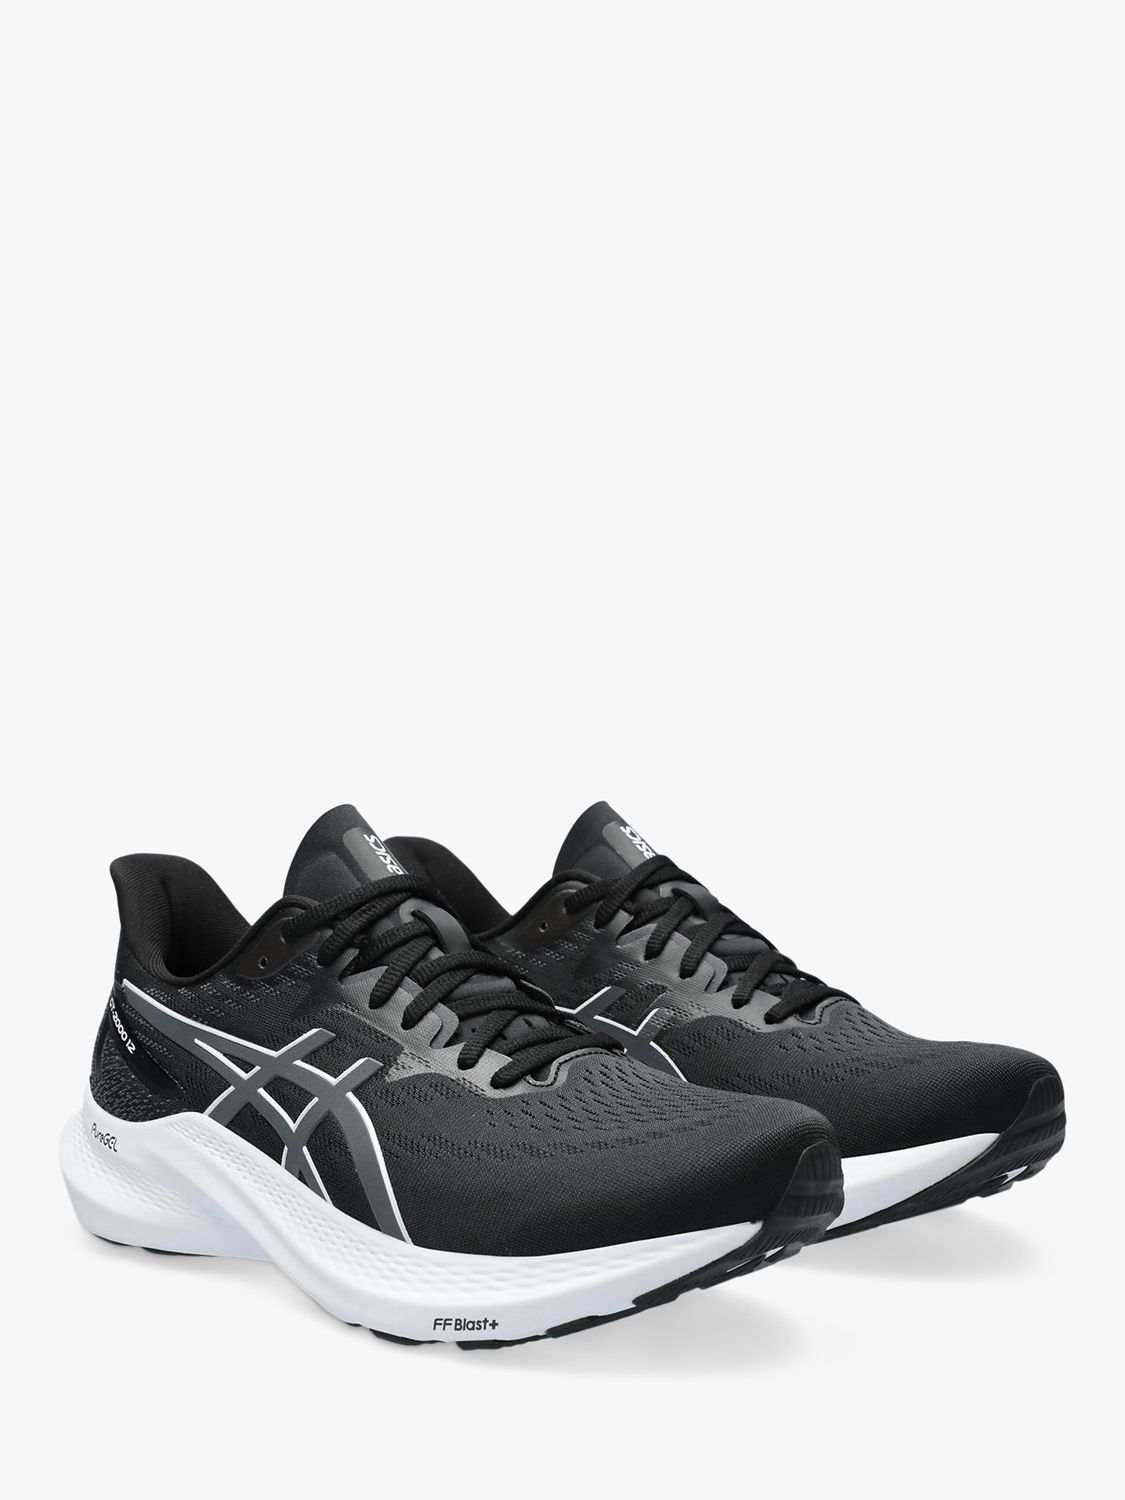 ASICS GT-2000 12 Men's Running Shoes, Black/Carrier Grey, 9